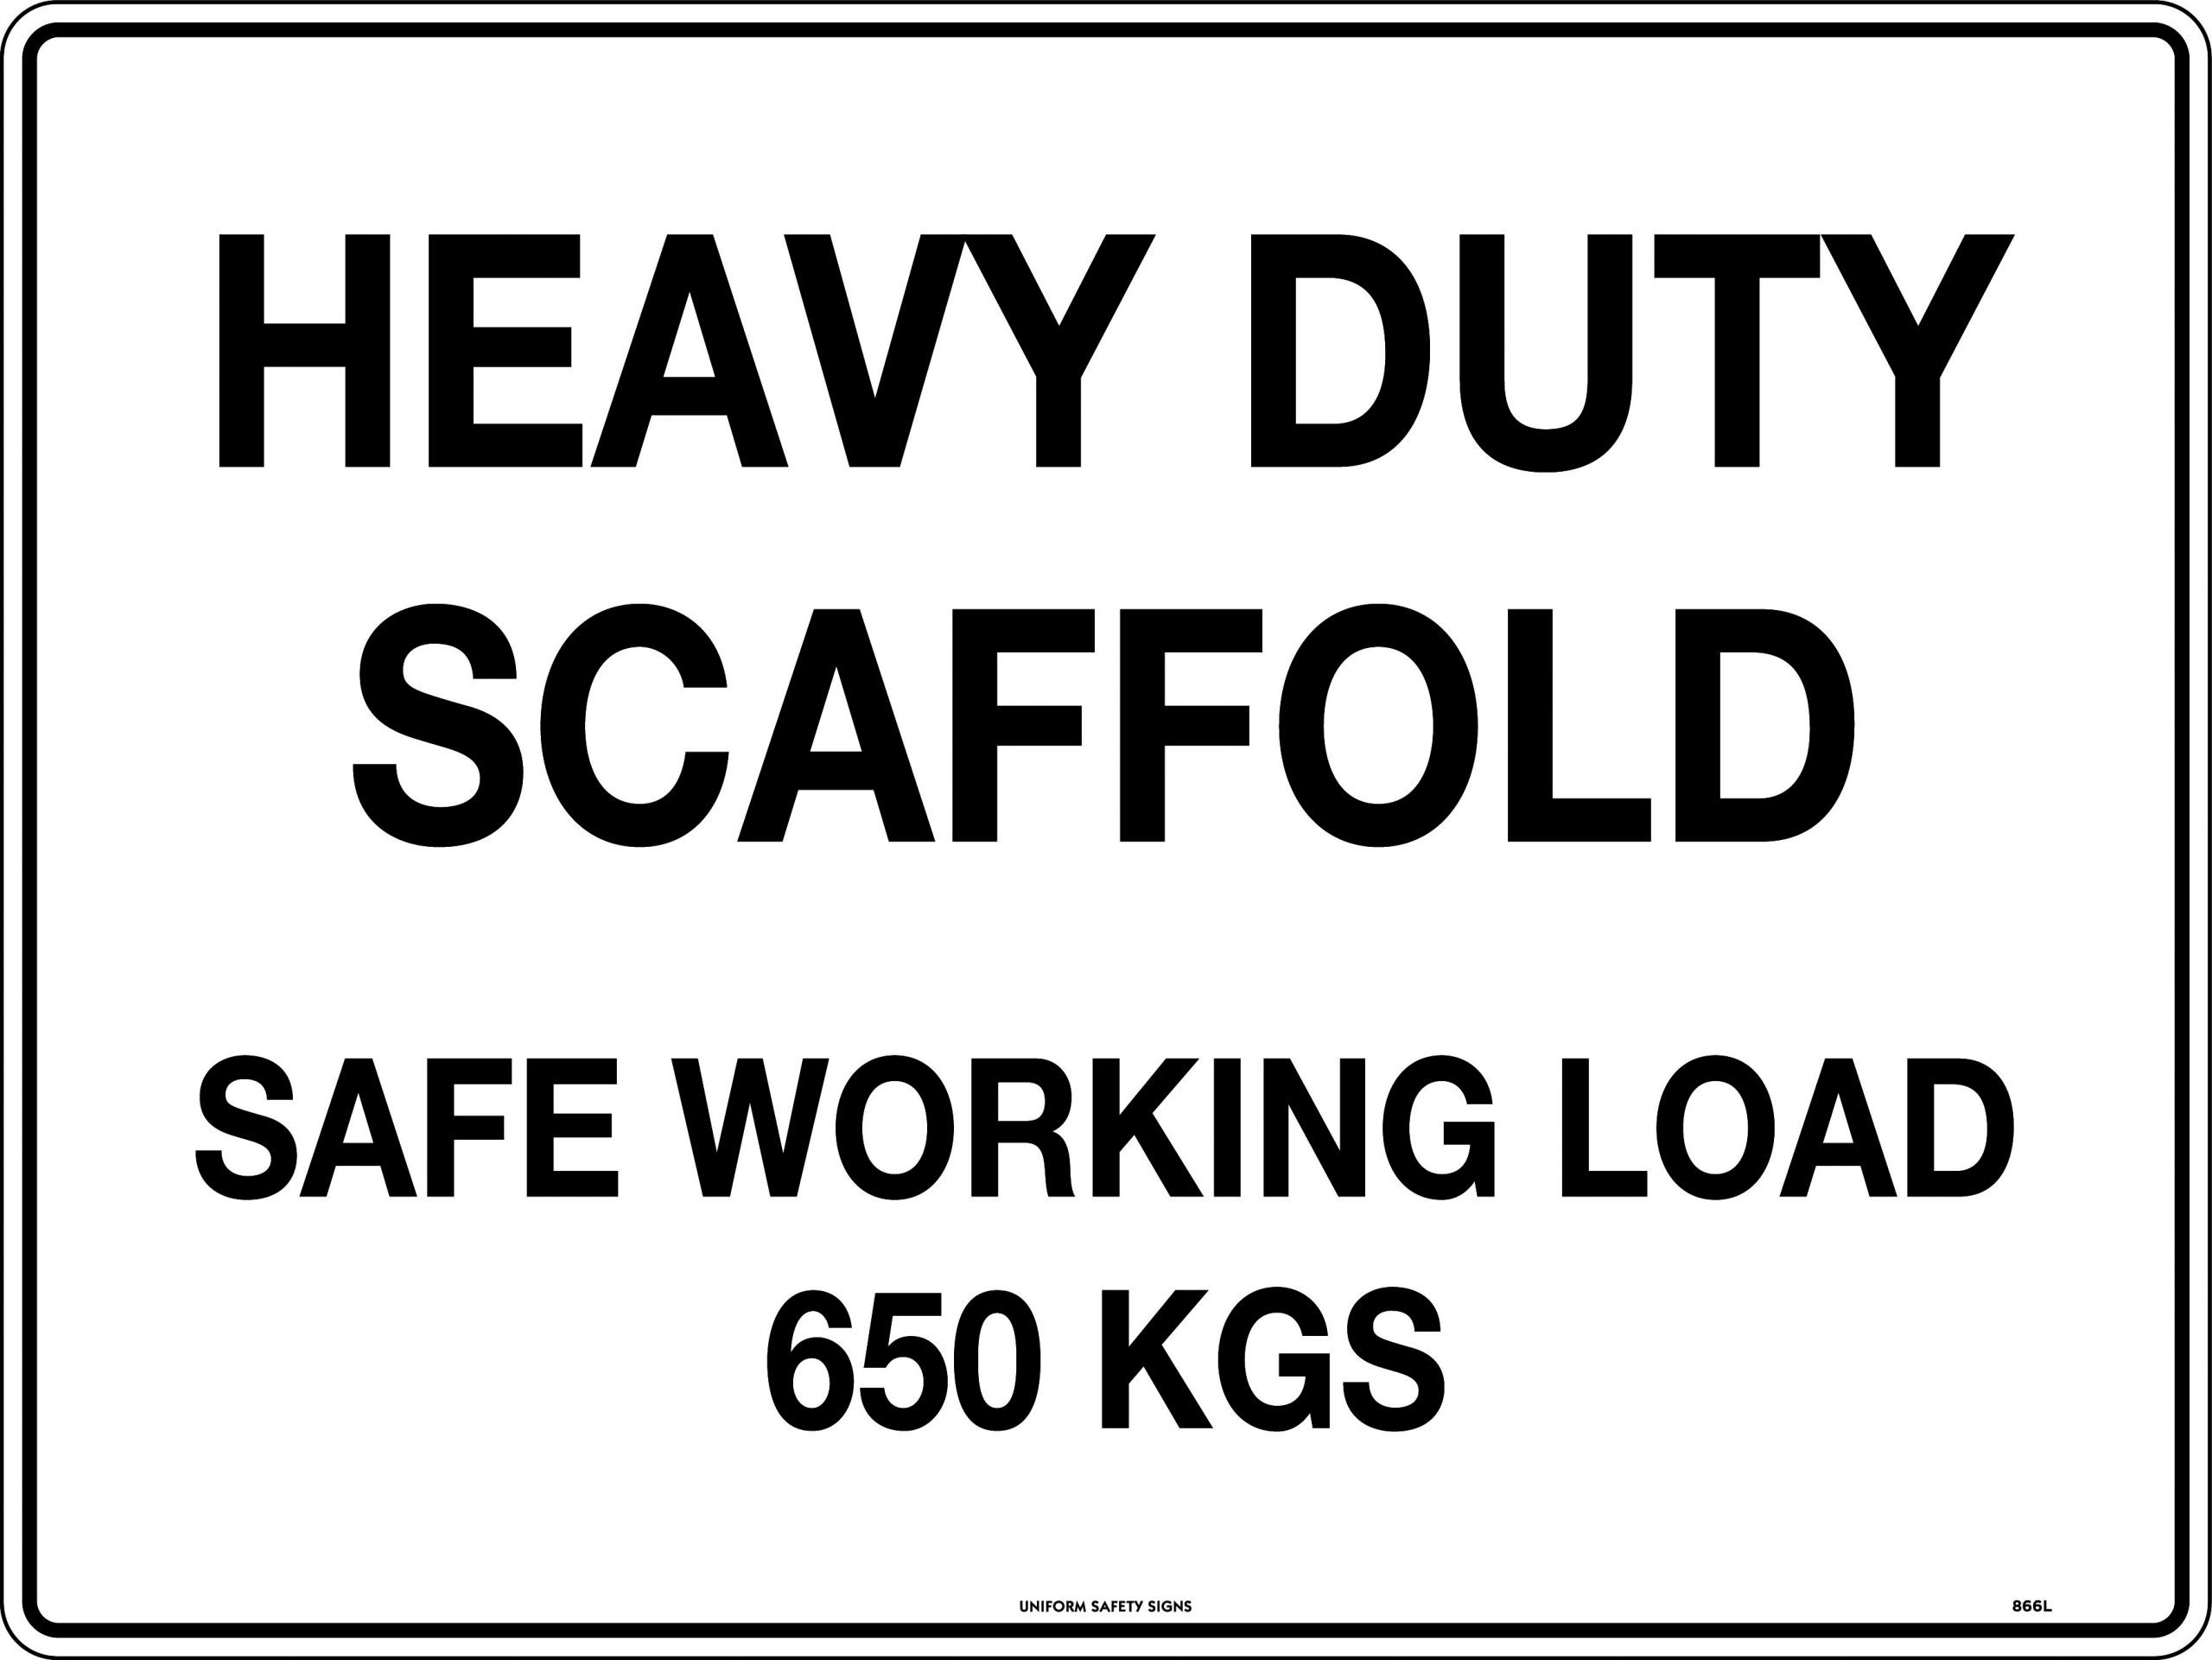 UNIFORM SAFETY 600X450MM CORFLUTE HEAVY DUTY SCAFFOLD SAFE WORKING LOA